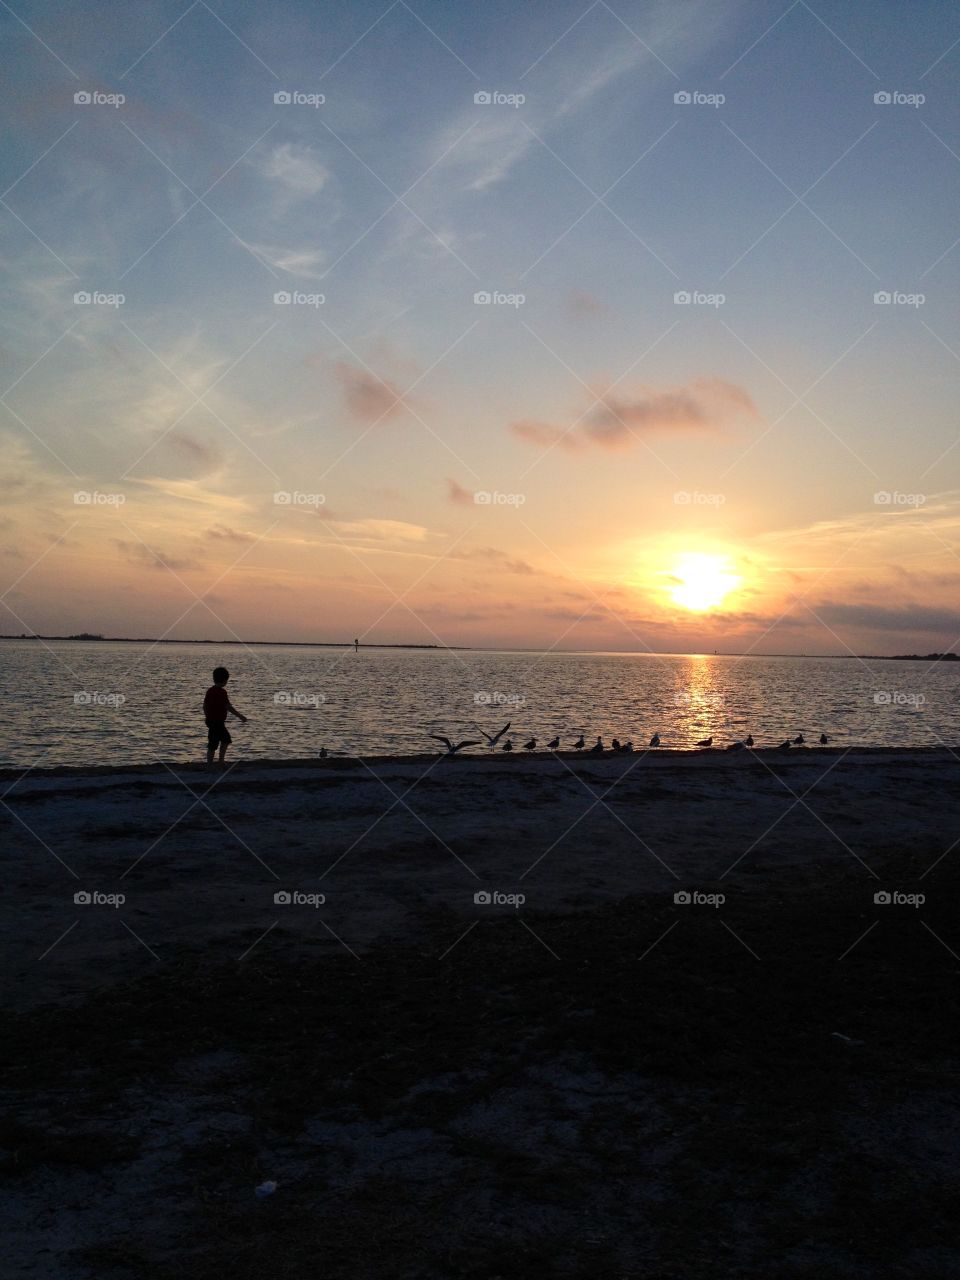 Boy chasing birds at sunset